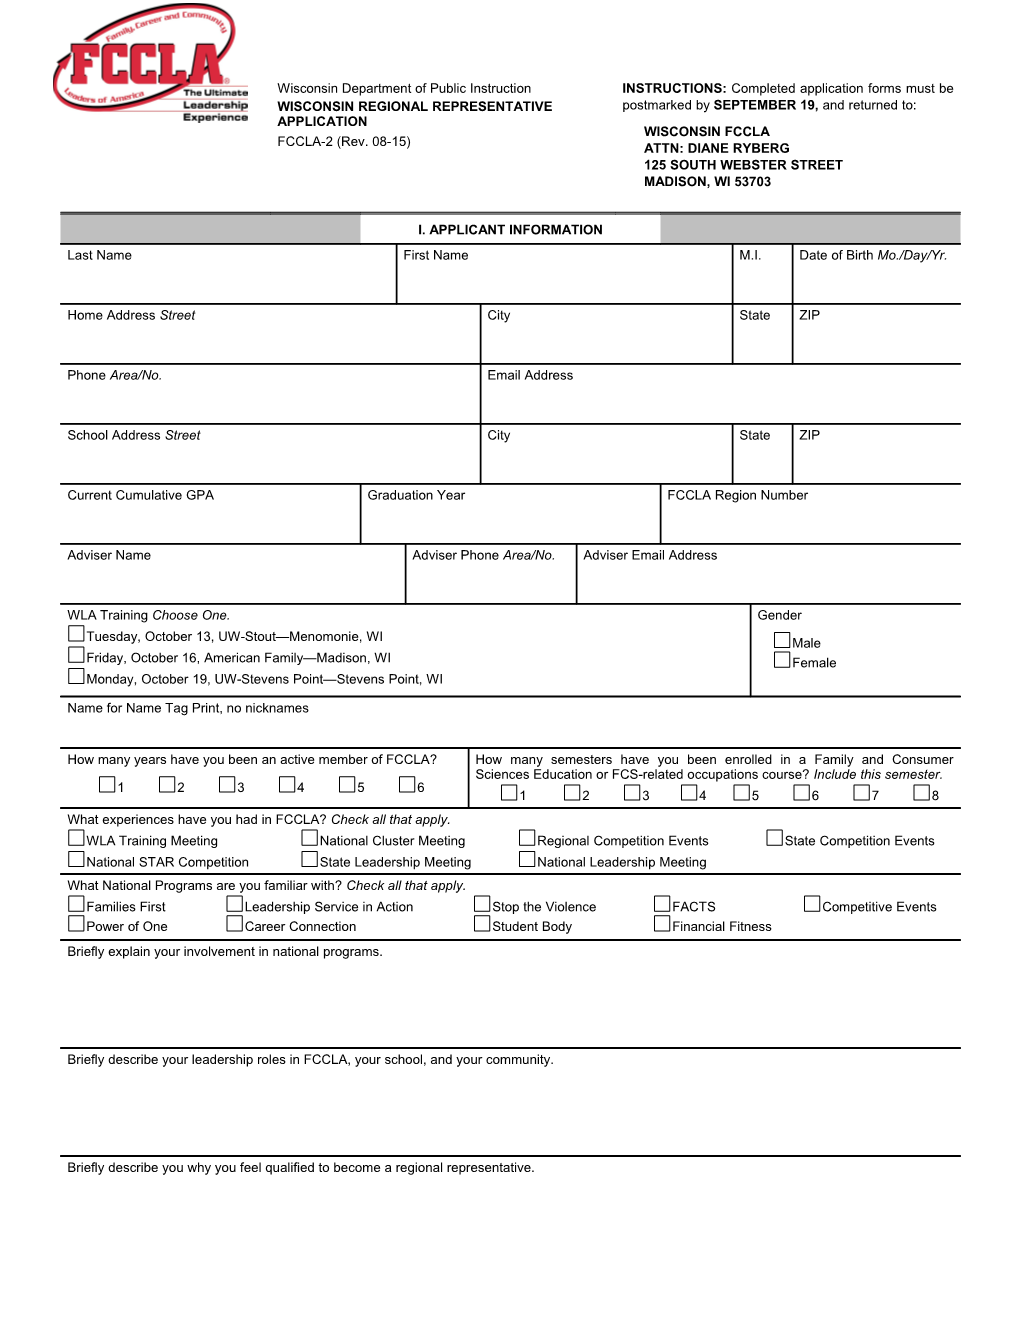 FCCLA Wisconsin Regional Representative Application